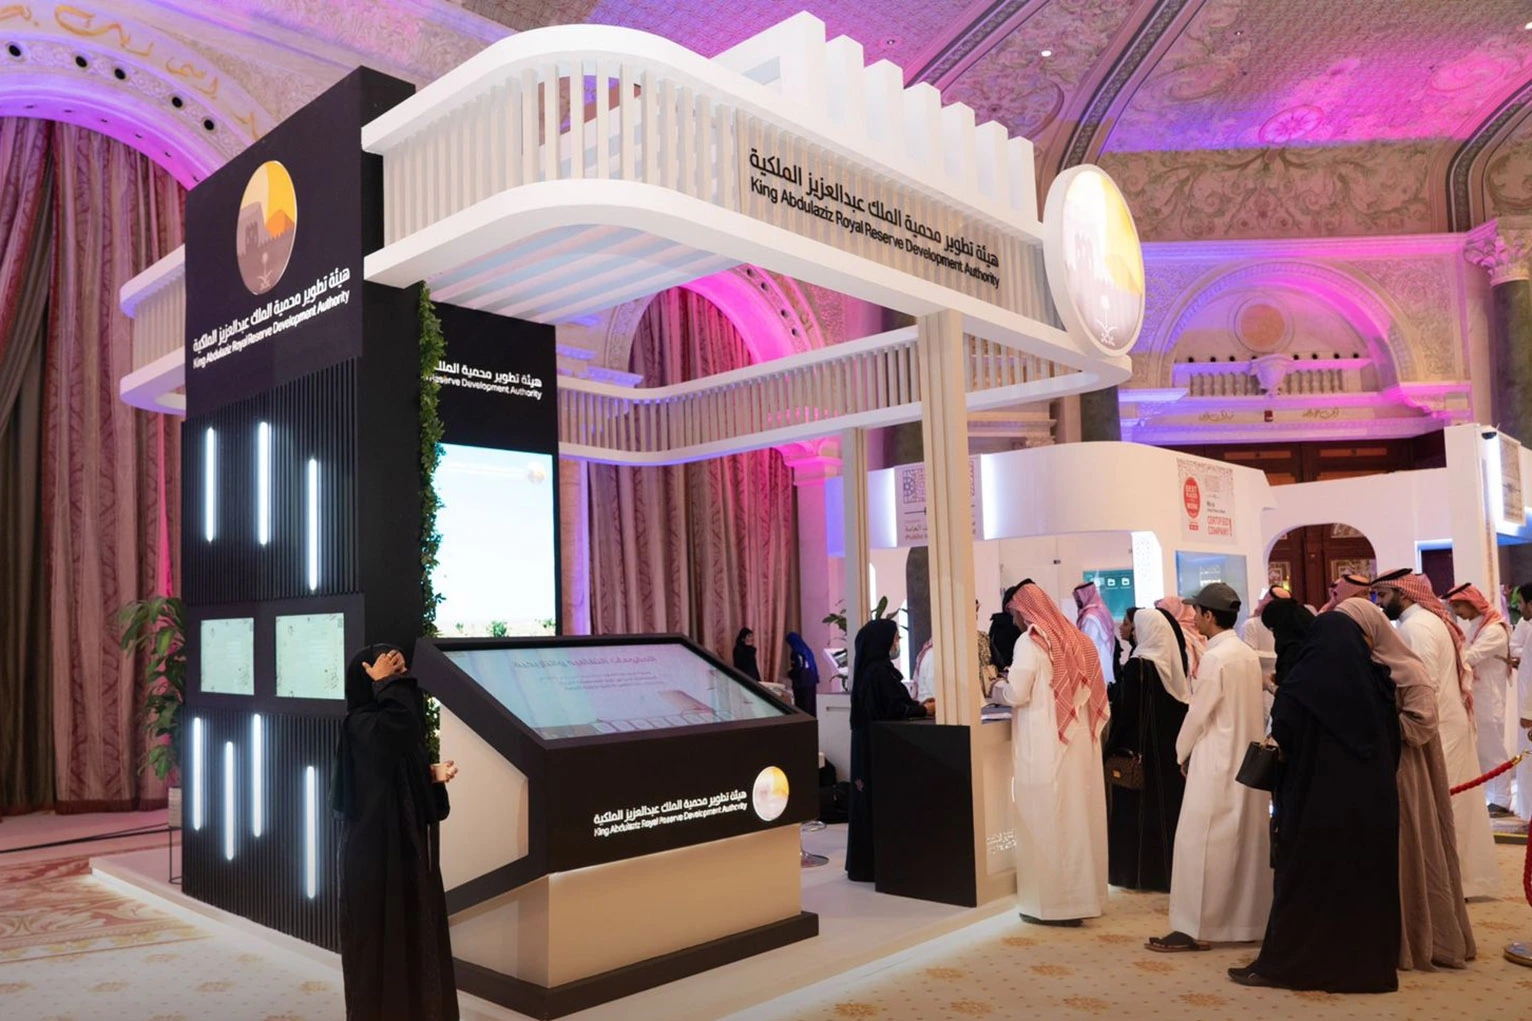 King Abdulaziz Royal Reserve Authority Recruitment Booth at Khatwa Exhibition